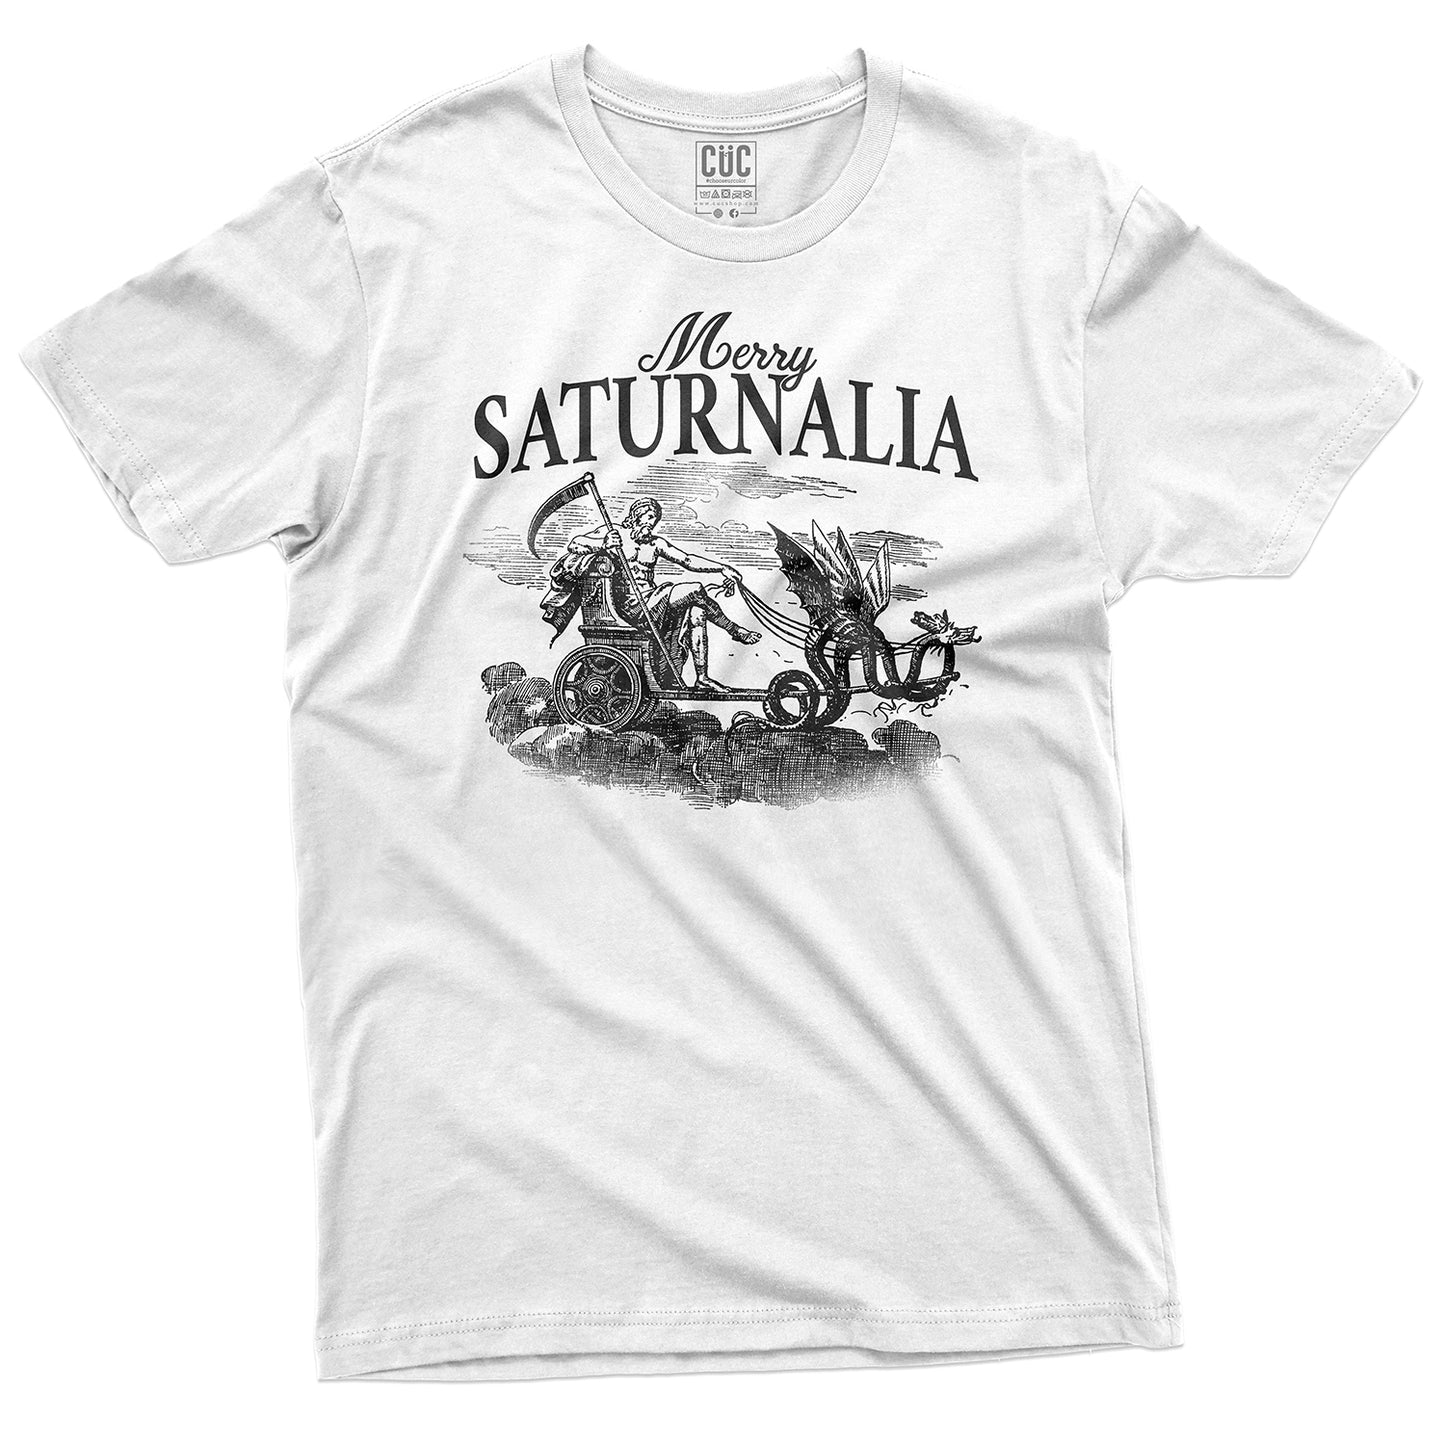 CUC T-Shirt MERRY SATURNALIA - Antica Roma - Natale #chooseurcolor